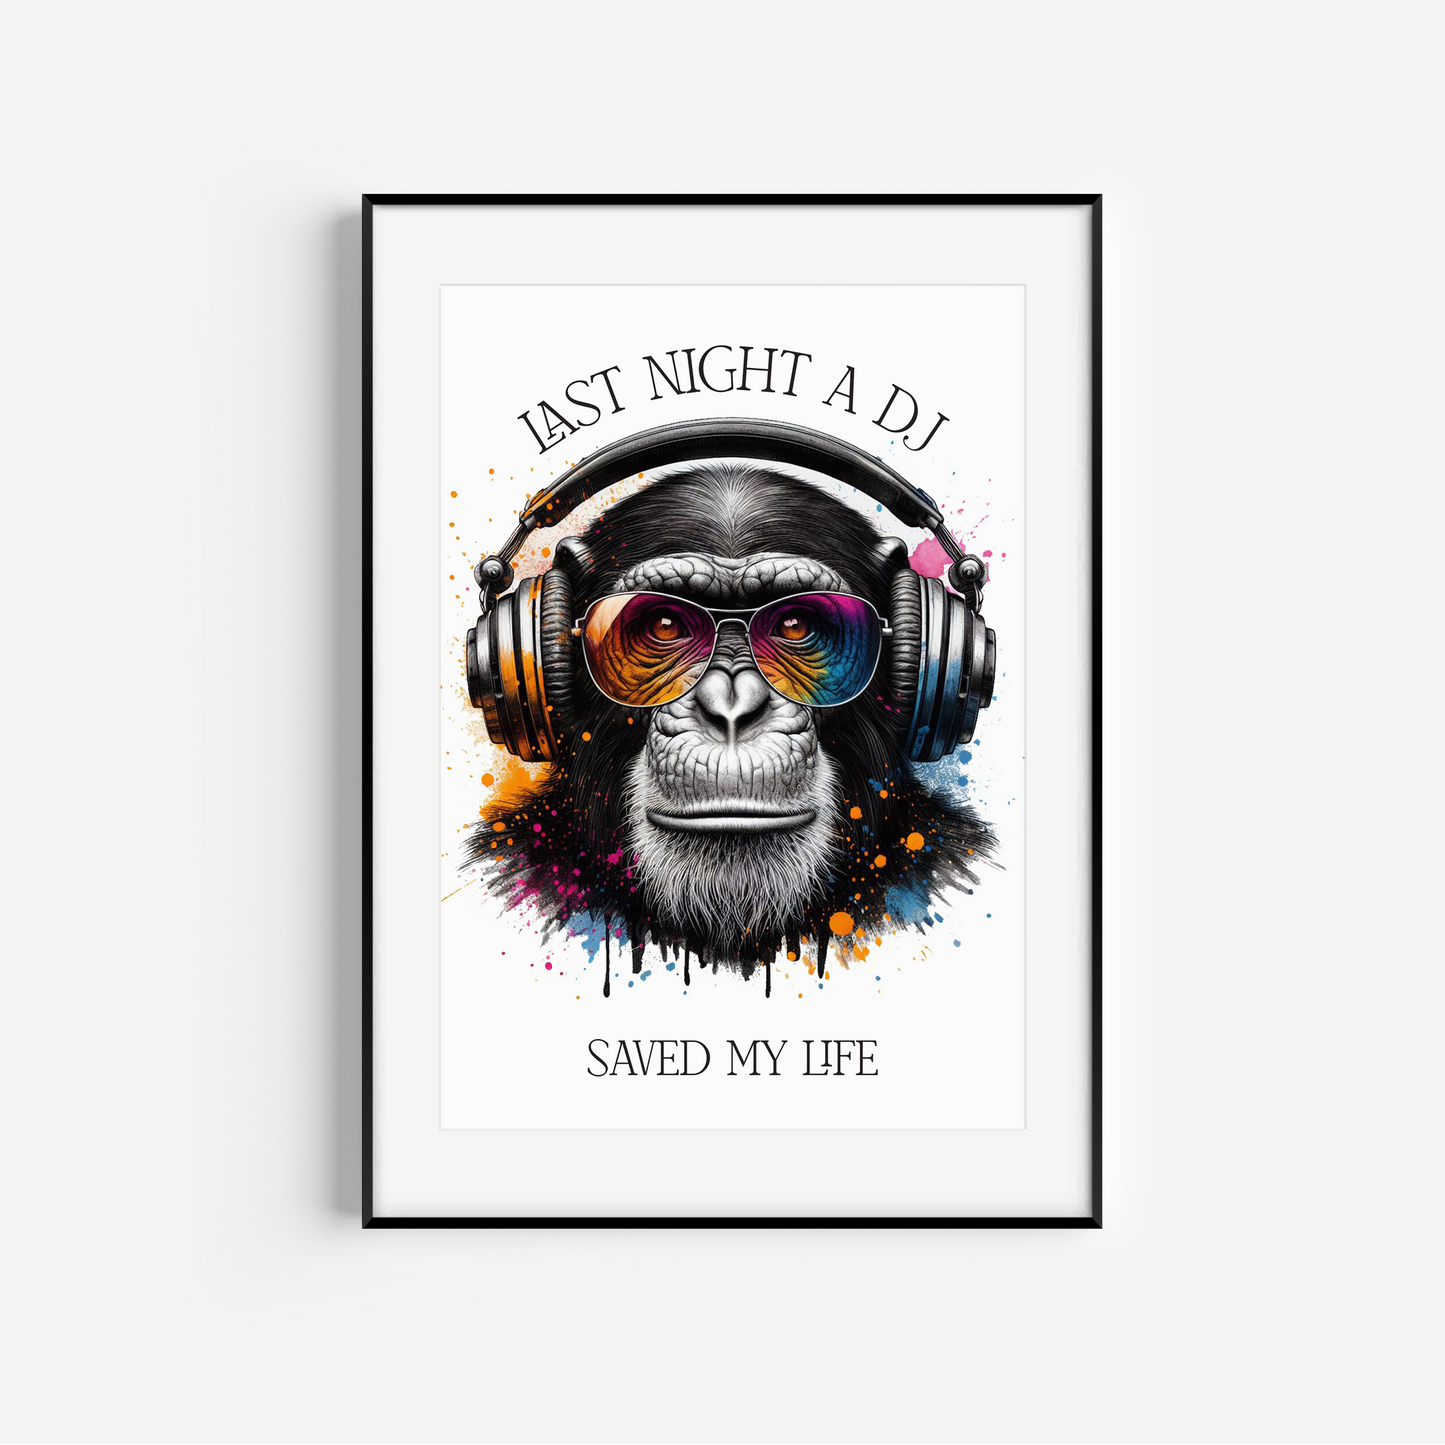 Colour Splash 'Last Night A DJ Saved My Life' Chimp Print